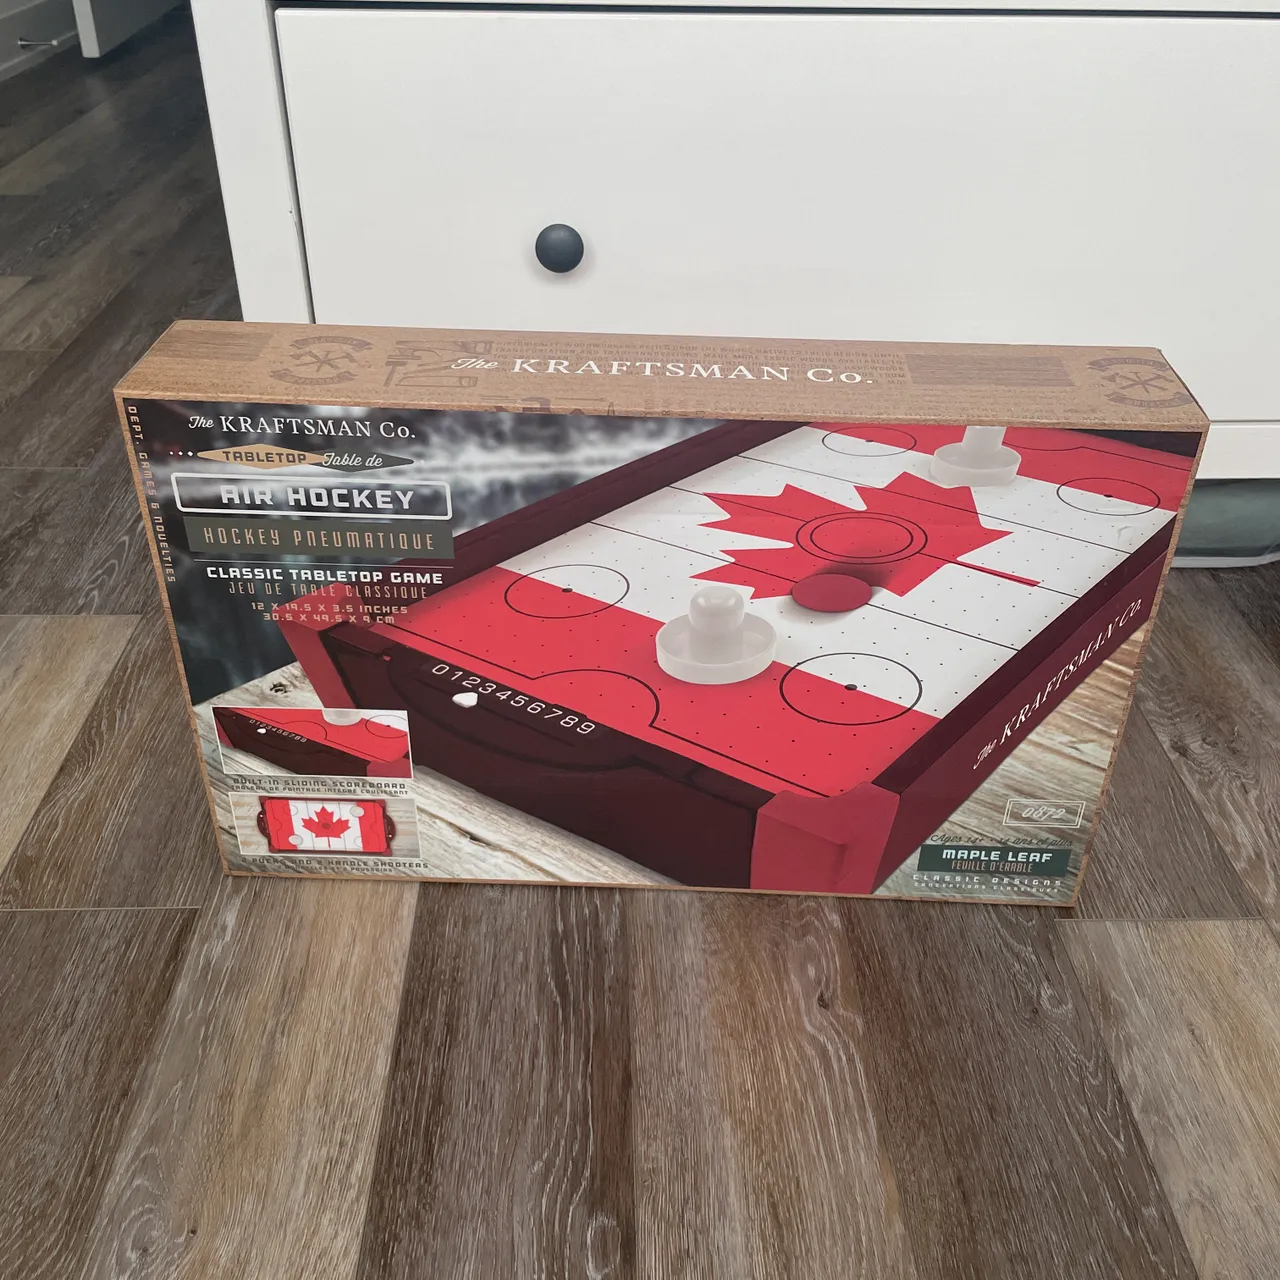 Brand new in box, air hockey photo 1